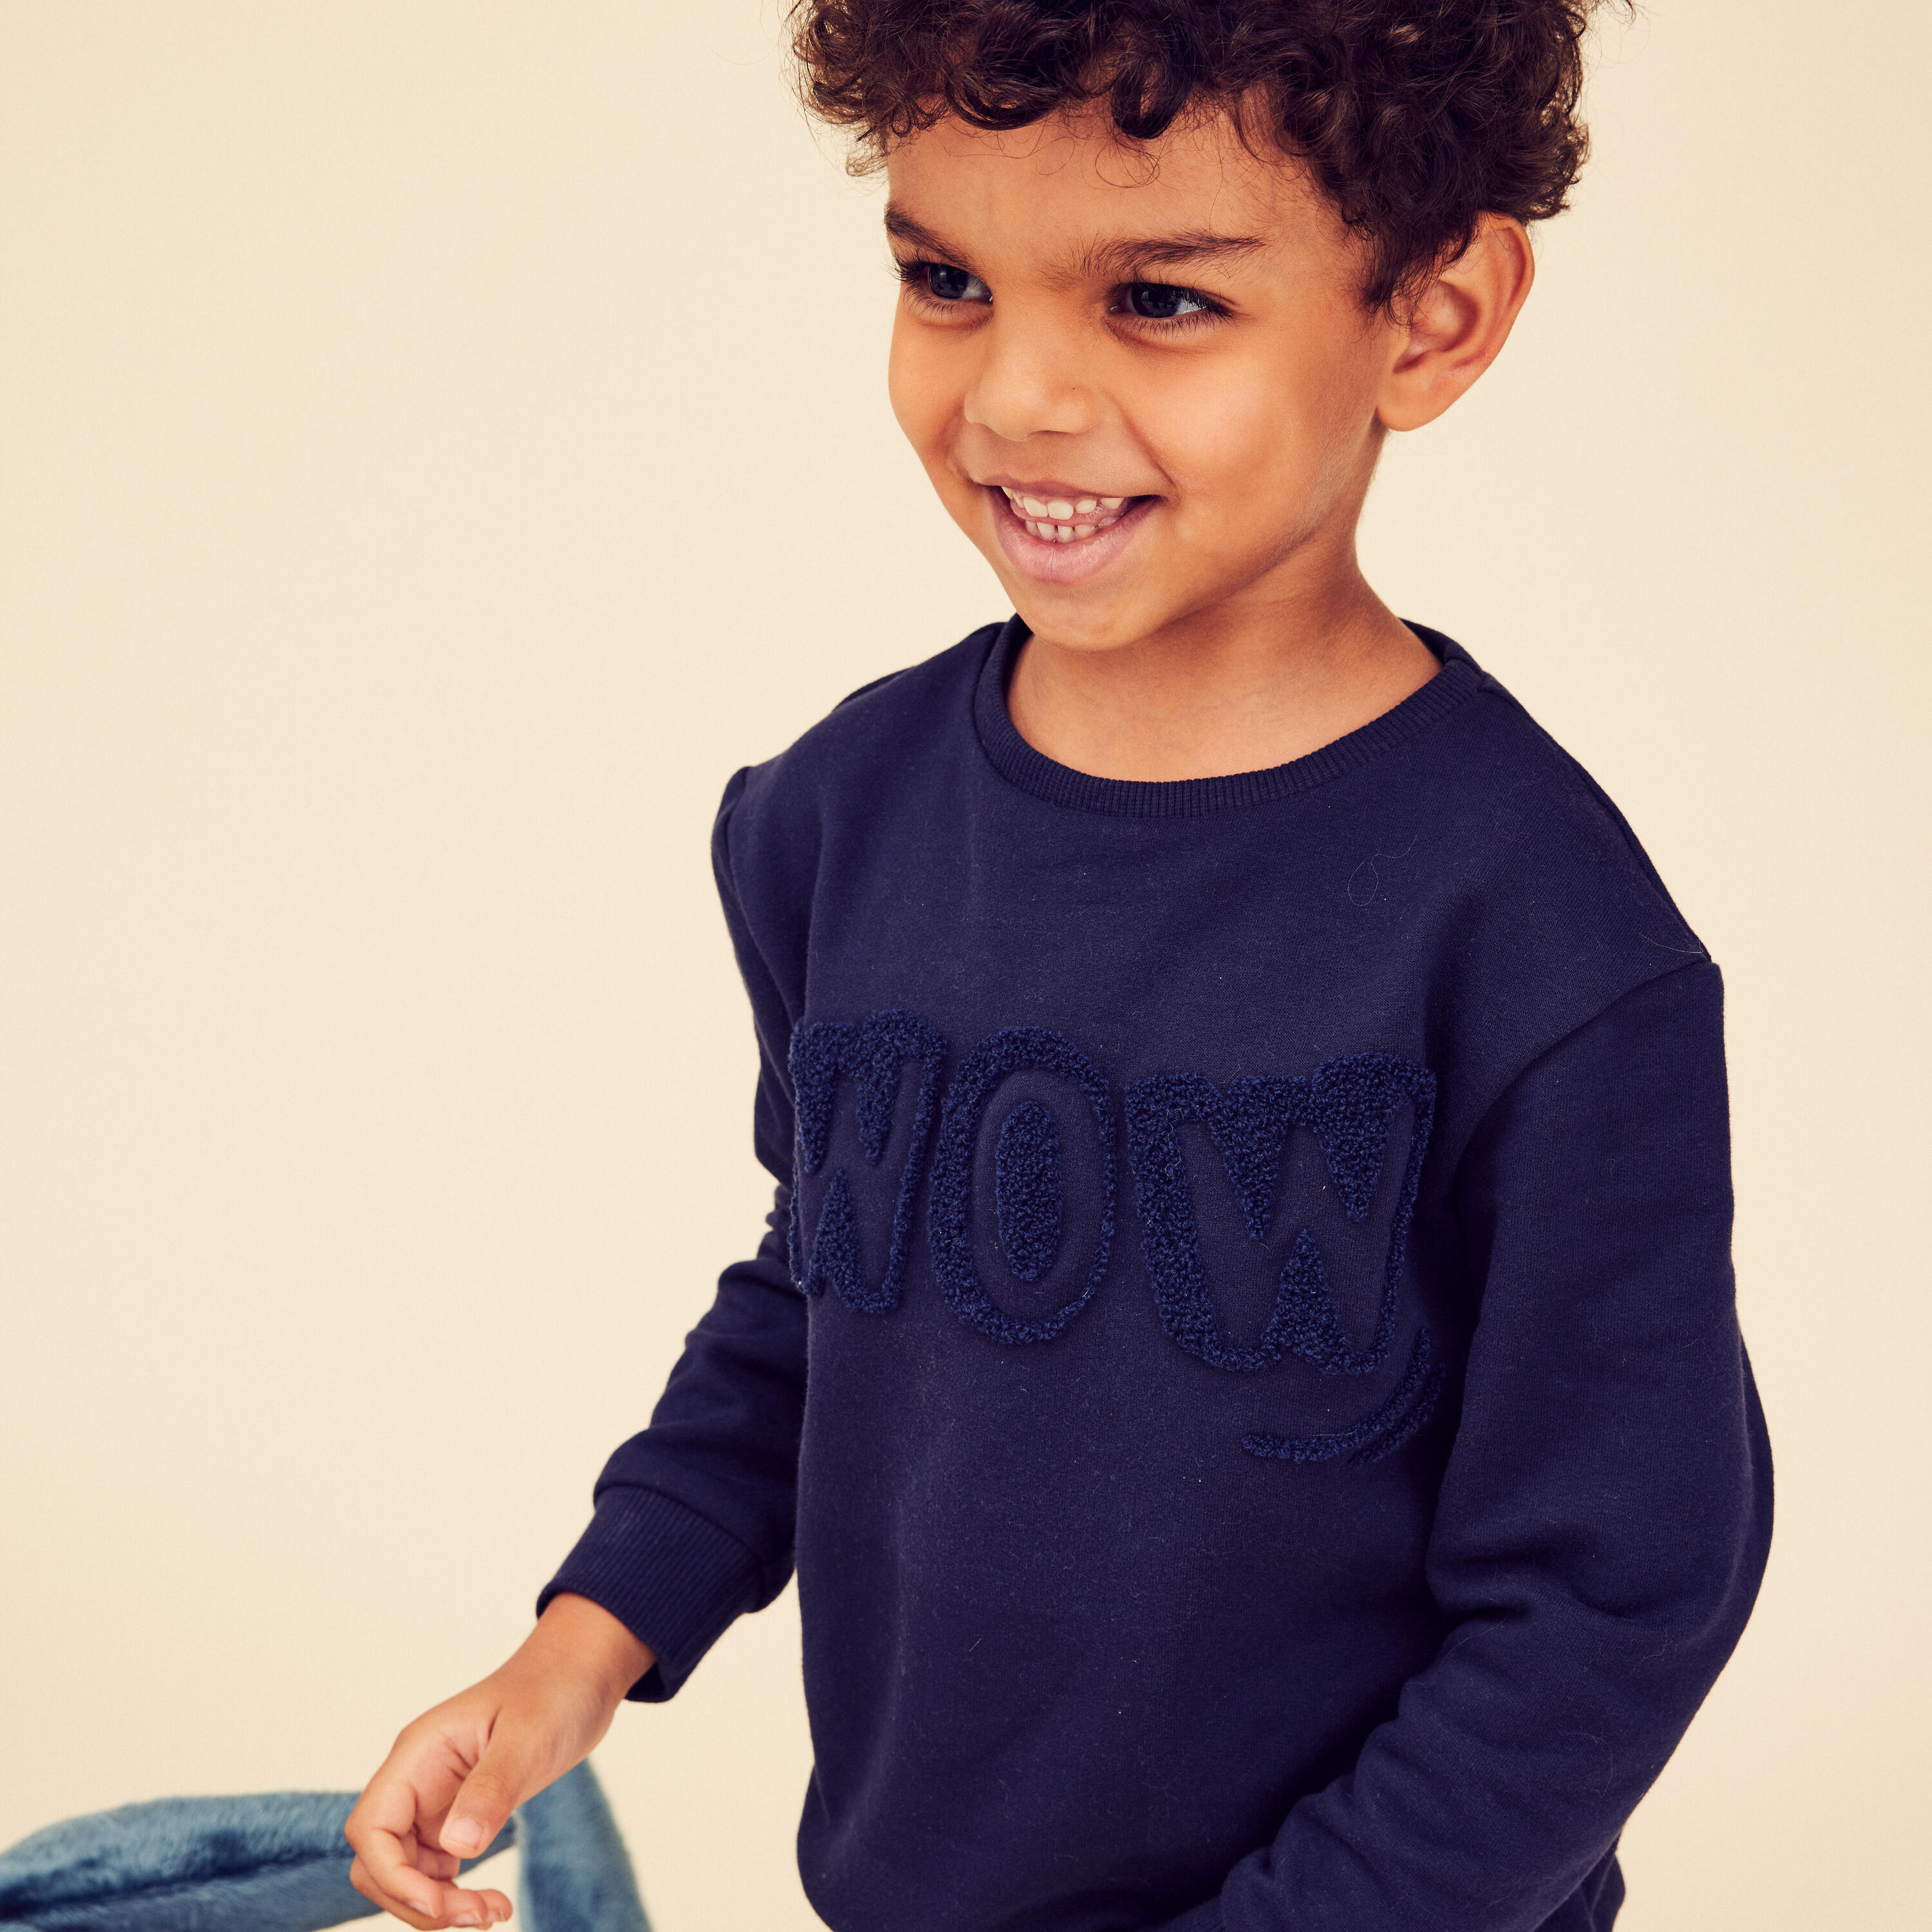 Baby Sweatshirt Basic - Navy Blue with Patterns 2/8